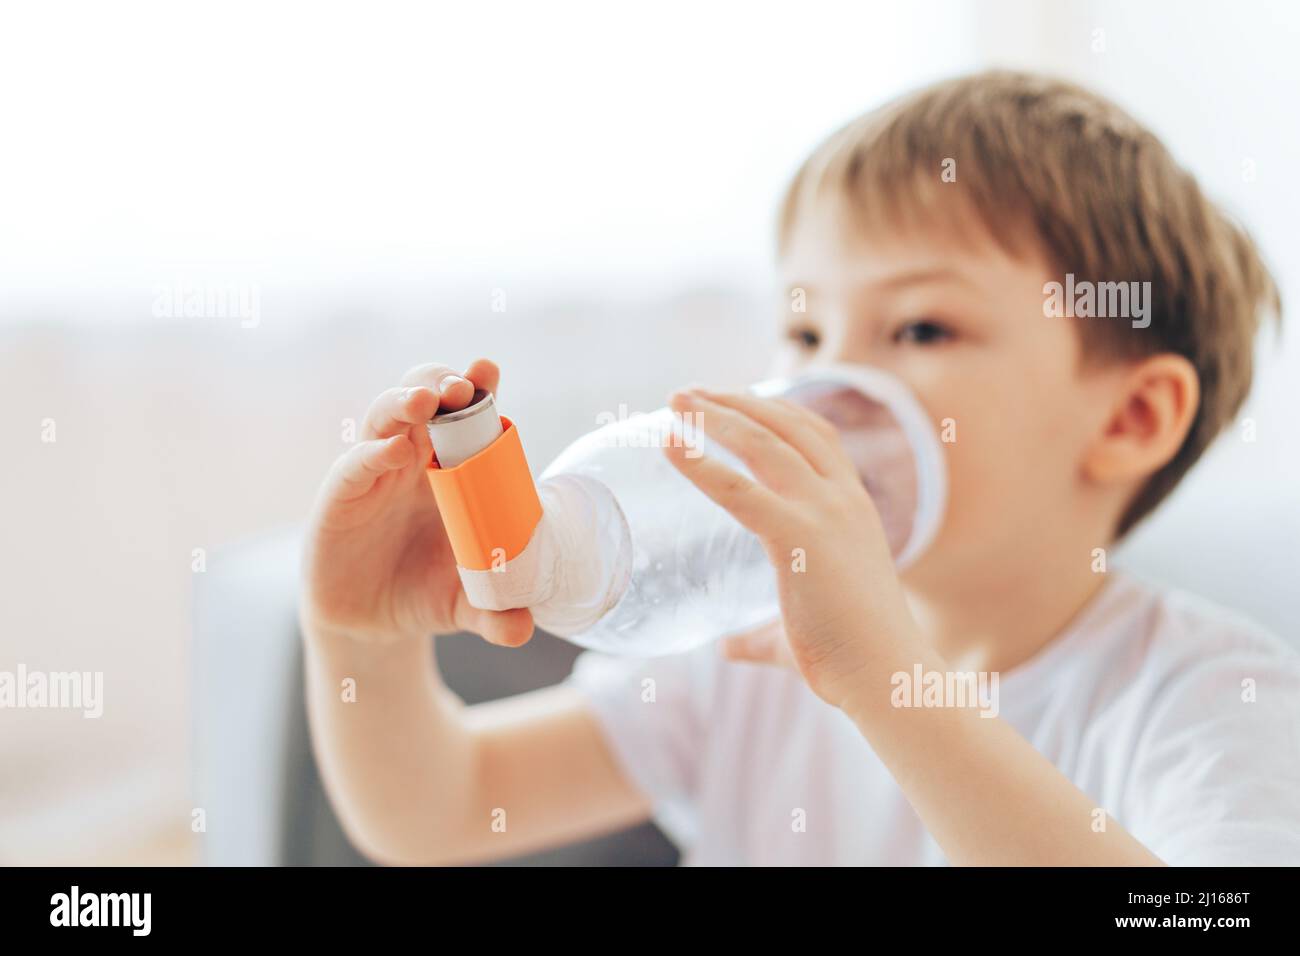 Boy inhales asthma medicine through homemade spacer Stock Photo